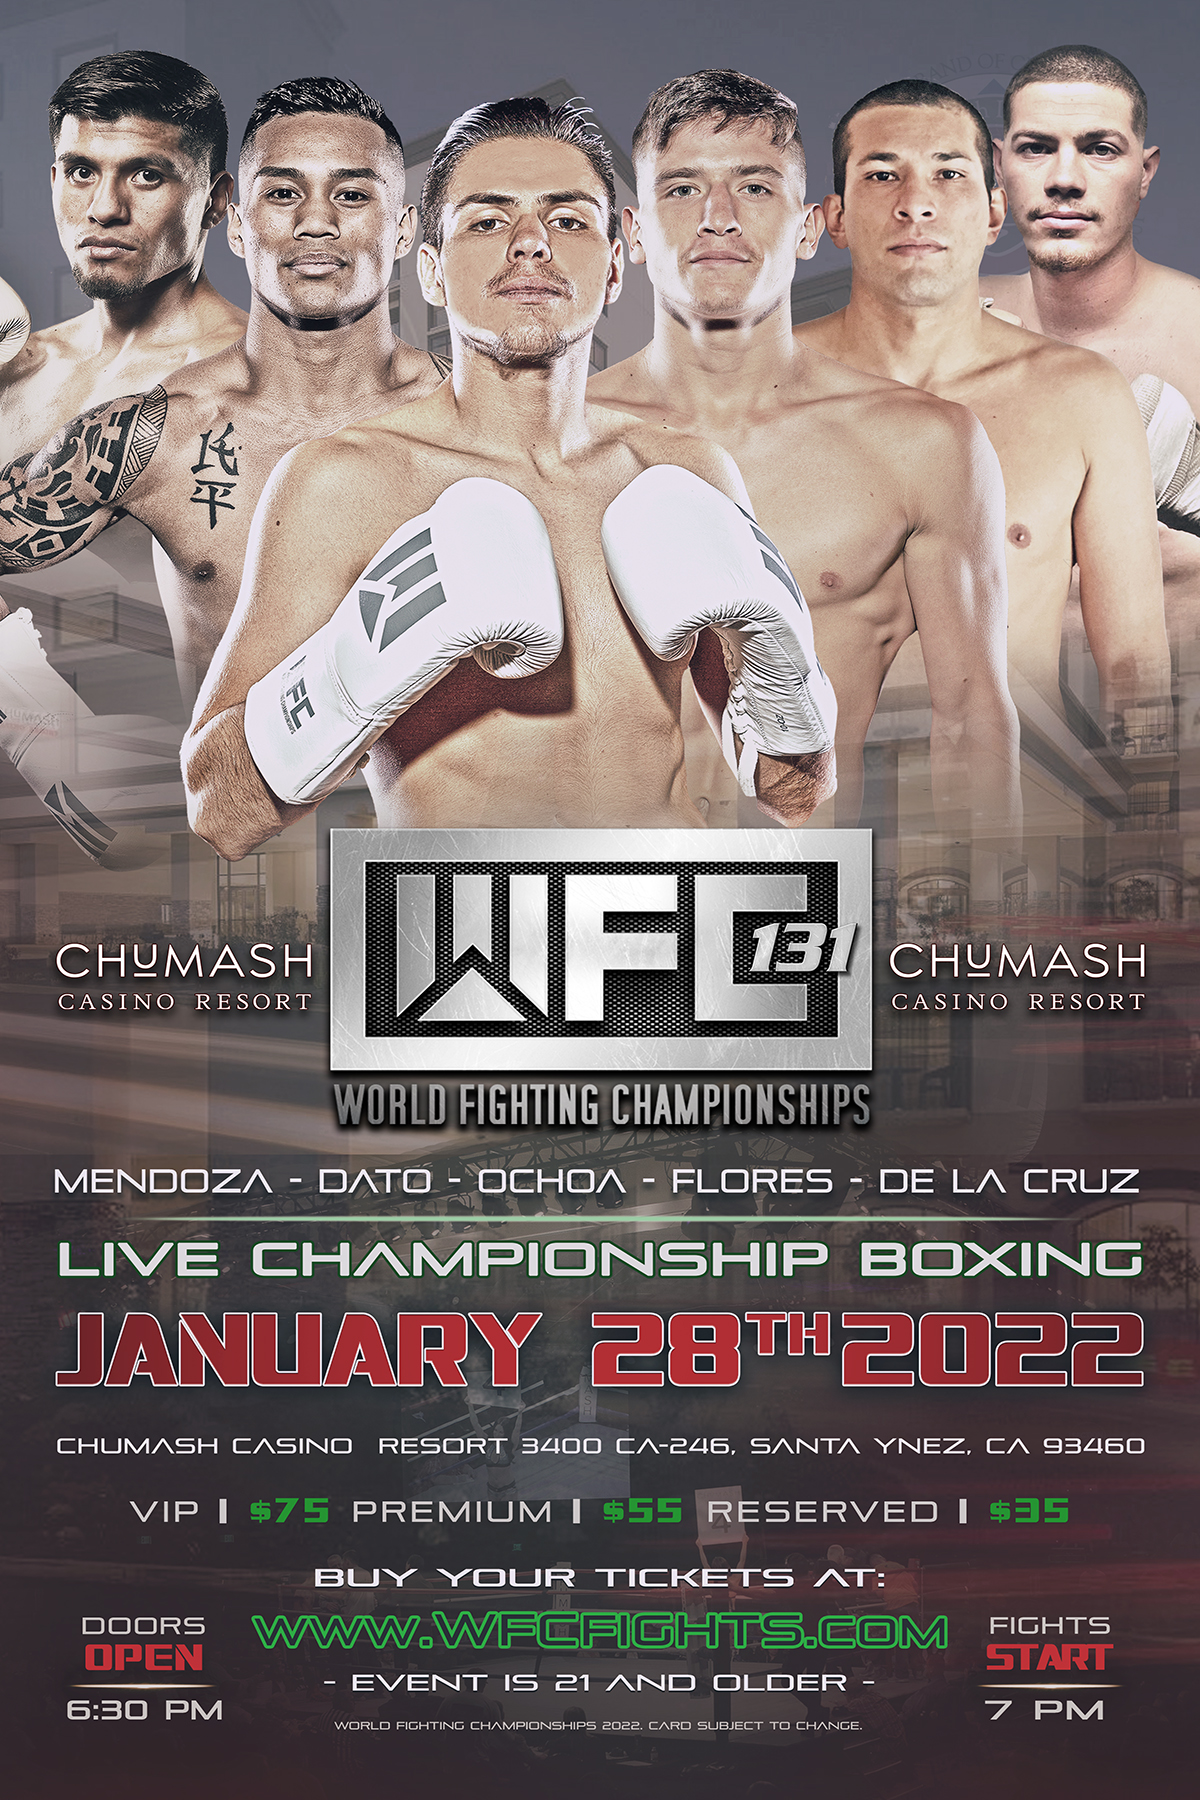 WFC 131 Championship LIVE BOXING January 28th ,2022 at Chumash Casino